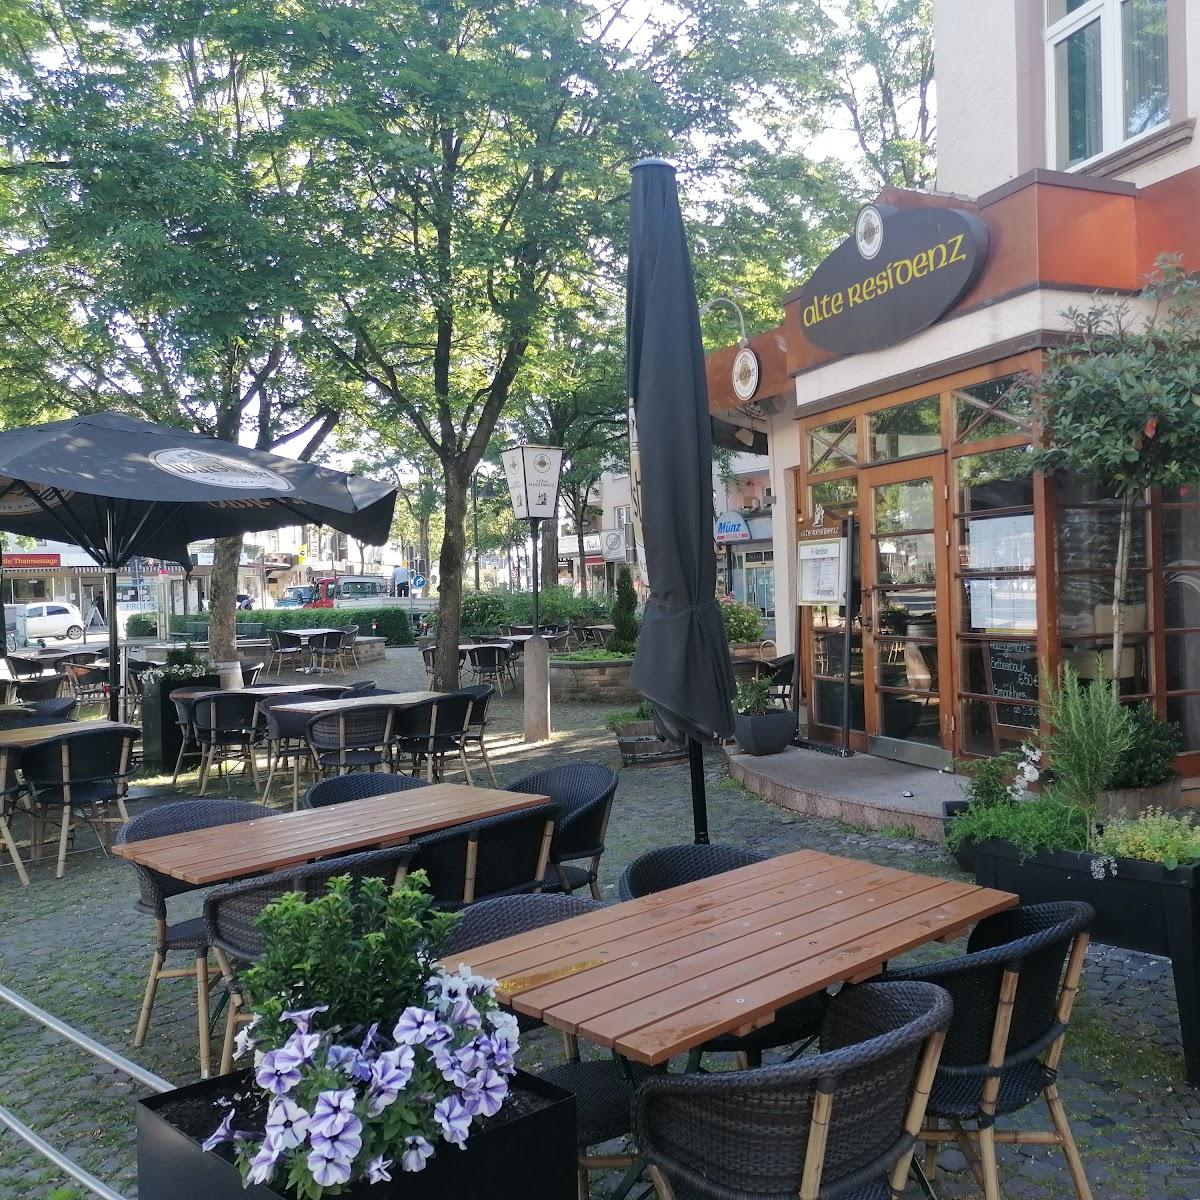 Restaurant "Alte Residenz" in Paderborn